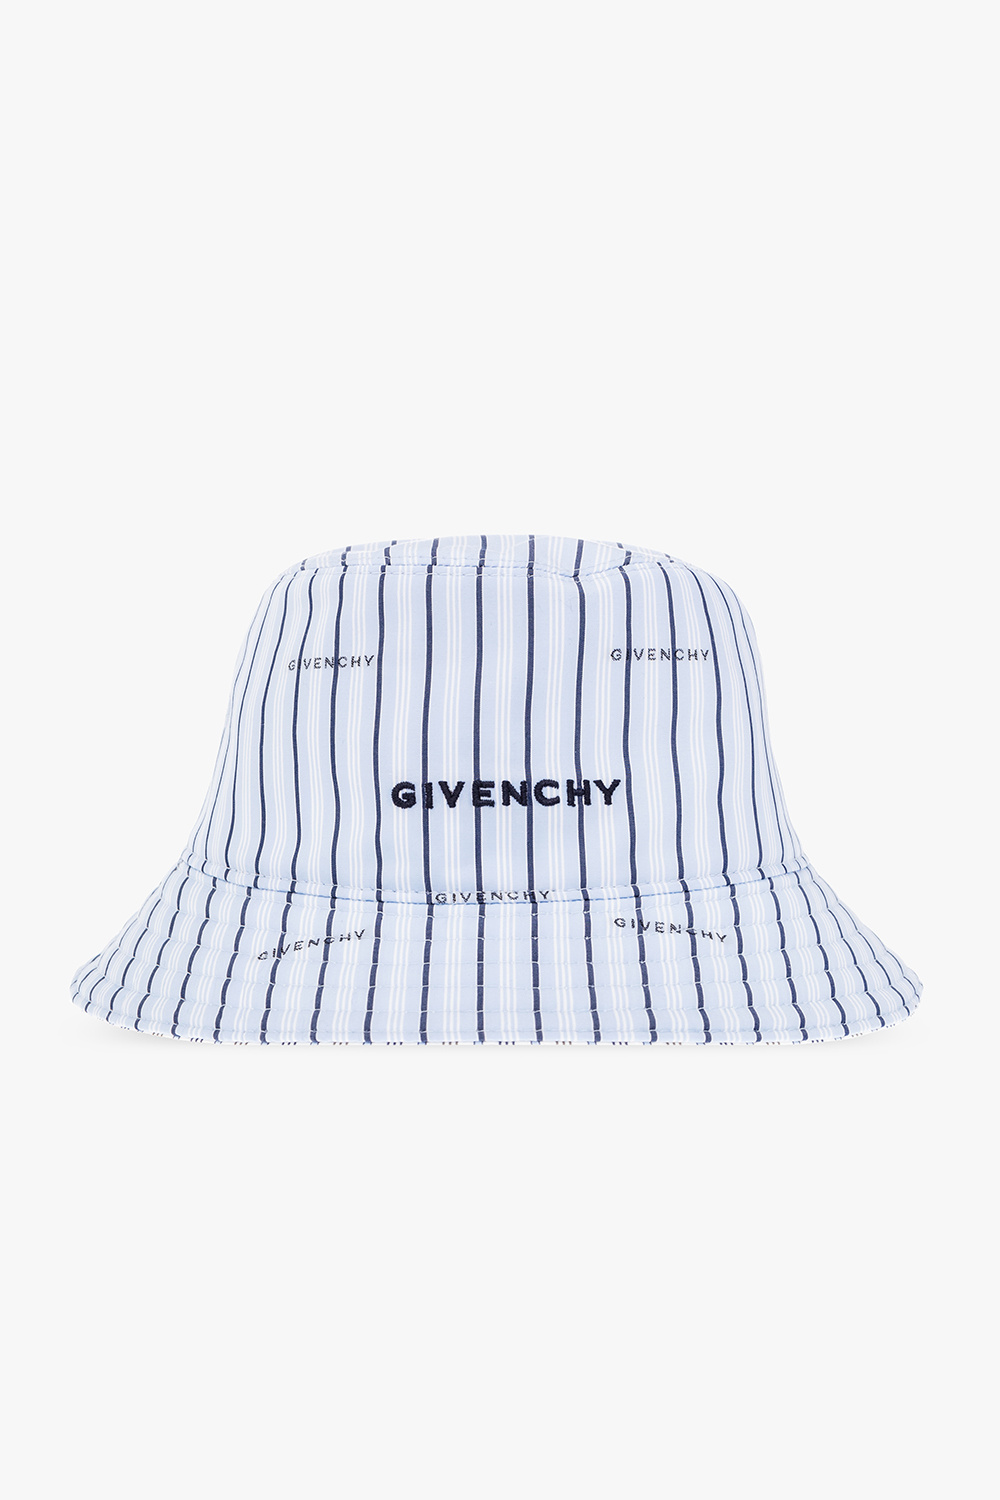 Givenchy Mens Black Clover Texas Resident Golf Flexfit Hat